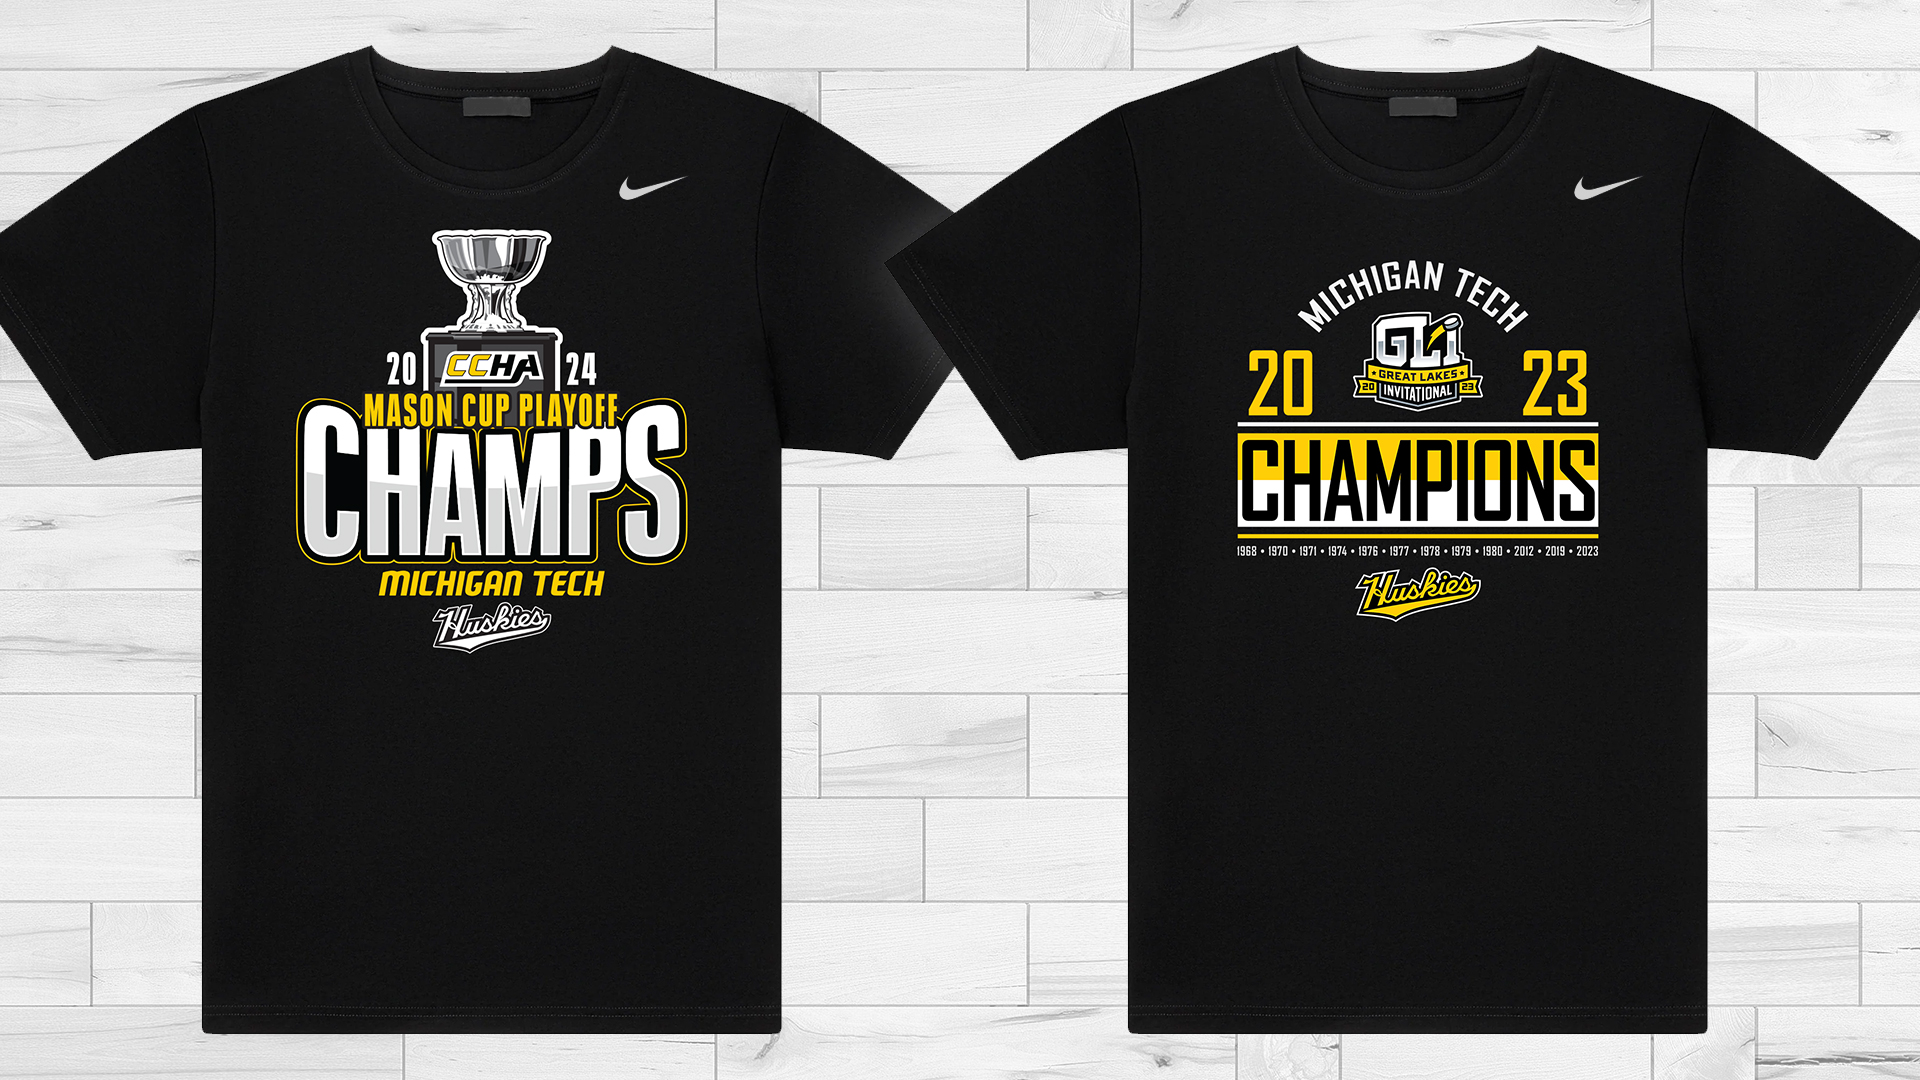 Hockey Championship Shirts Now On Sale